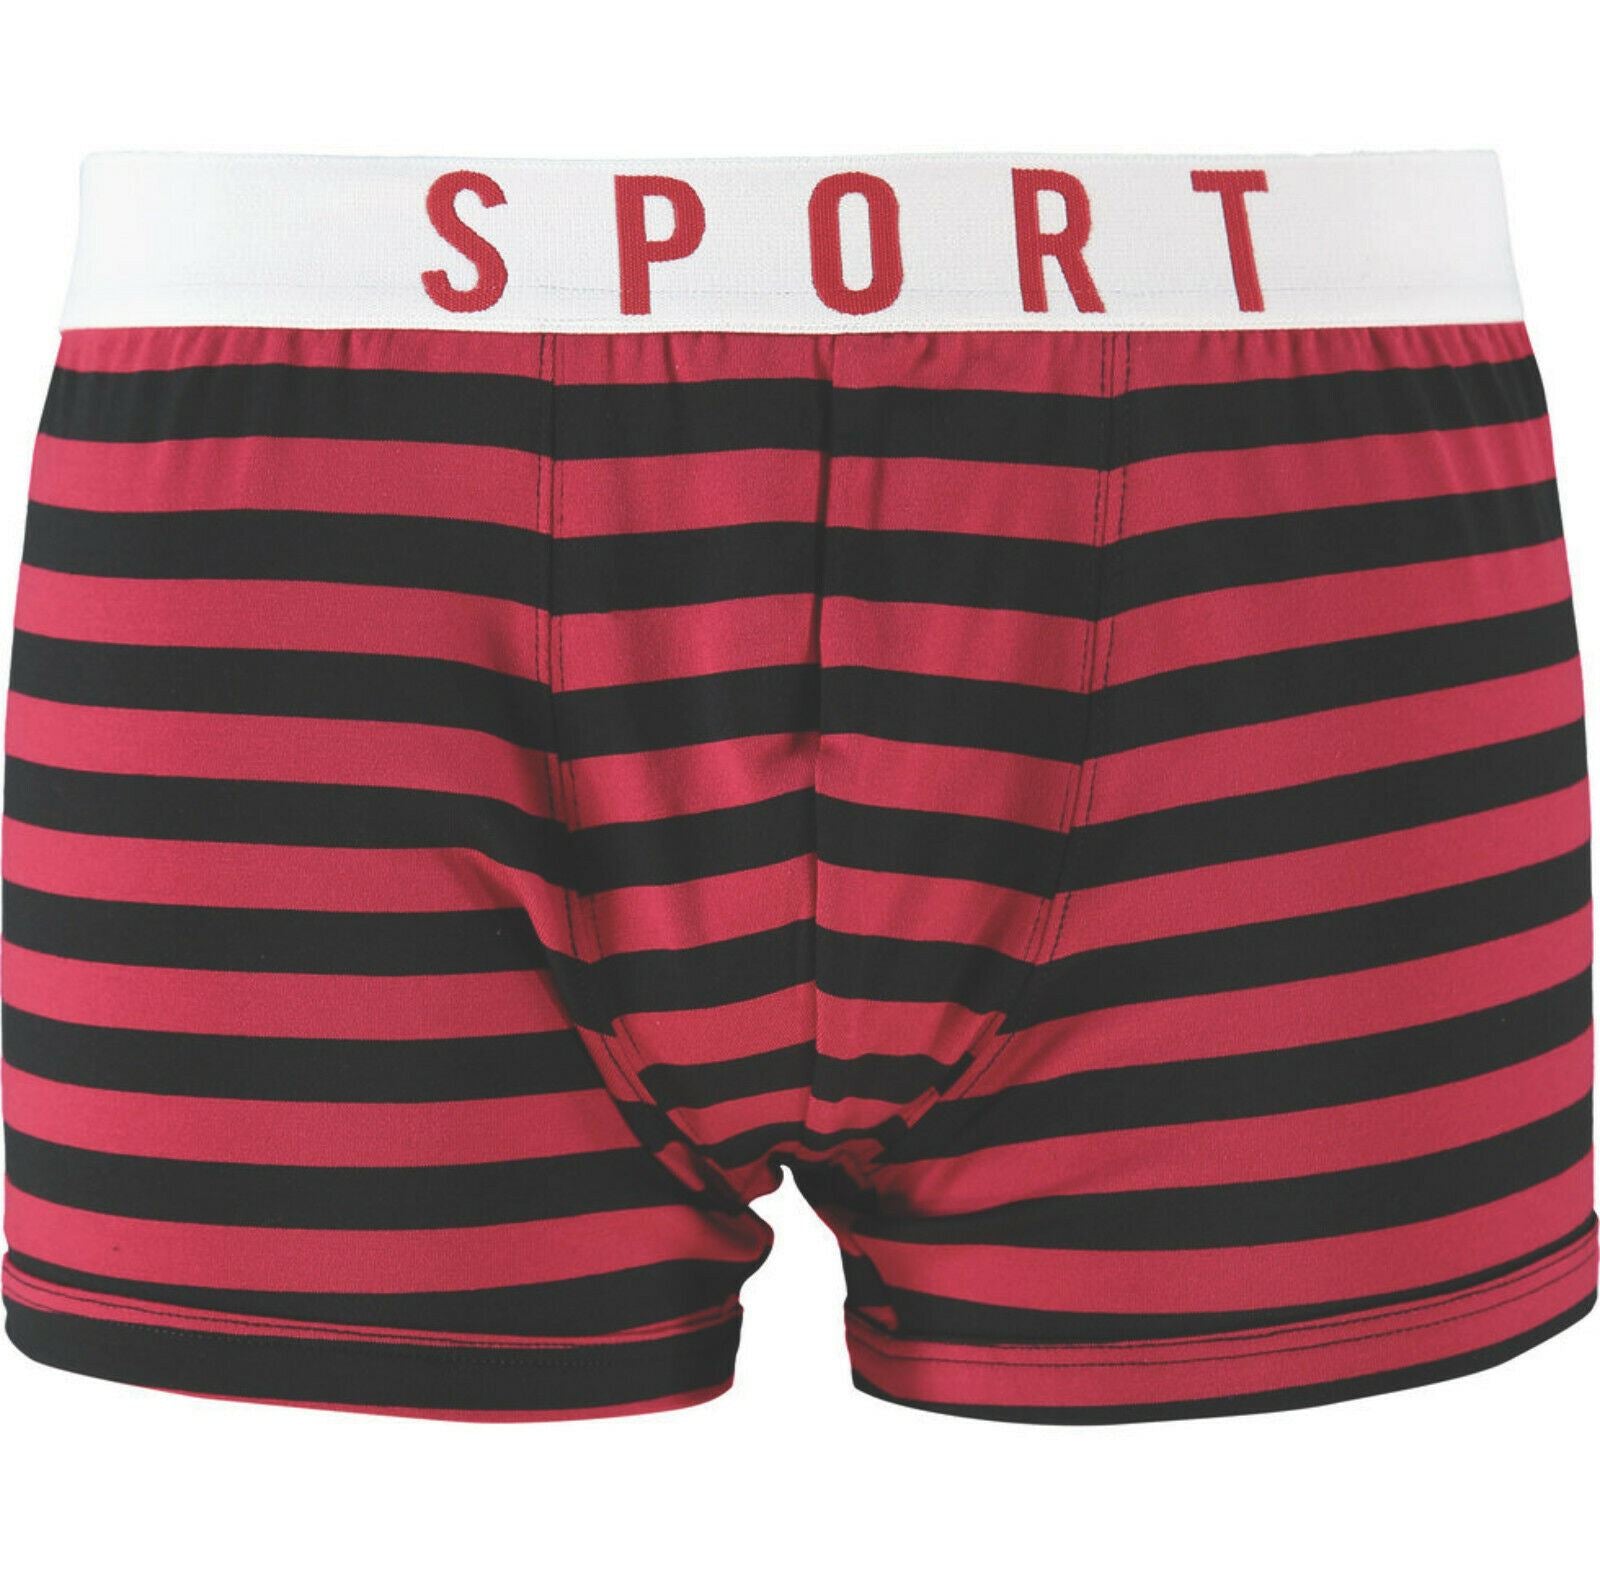 Mens Dolce & Gabbana Boxer Shorts 'Sport Model', size S /size M /size L /size XL